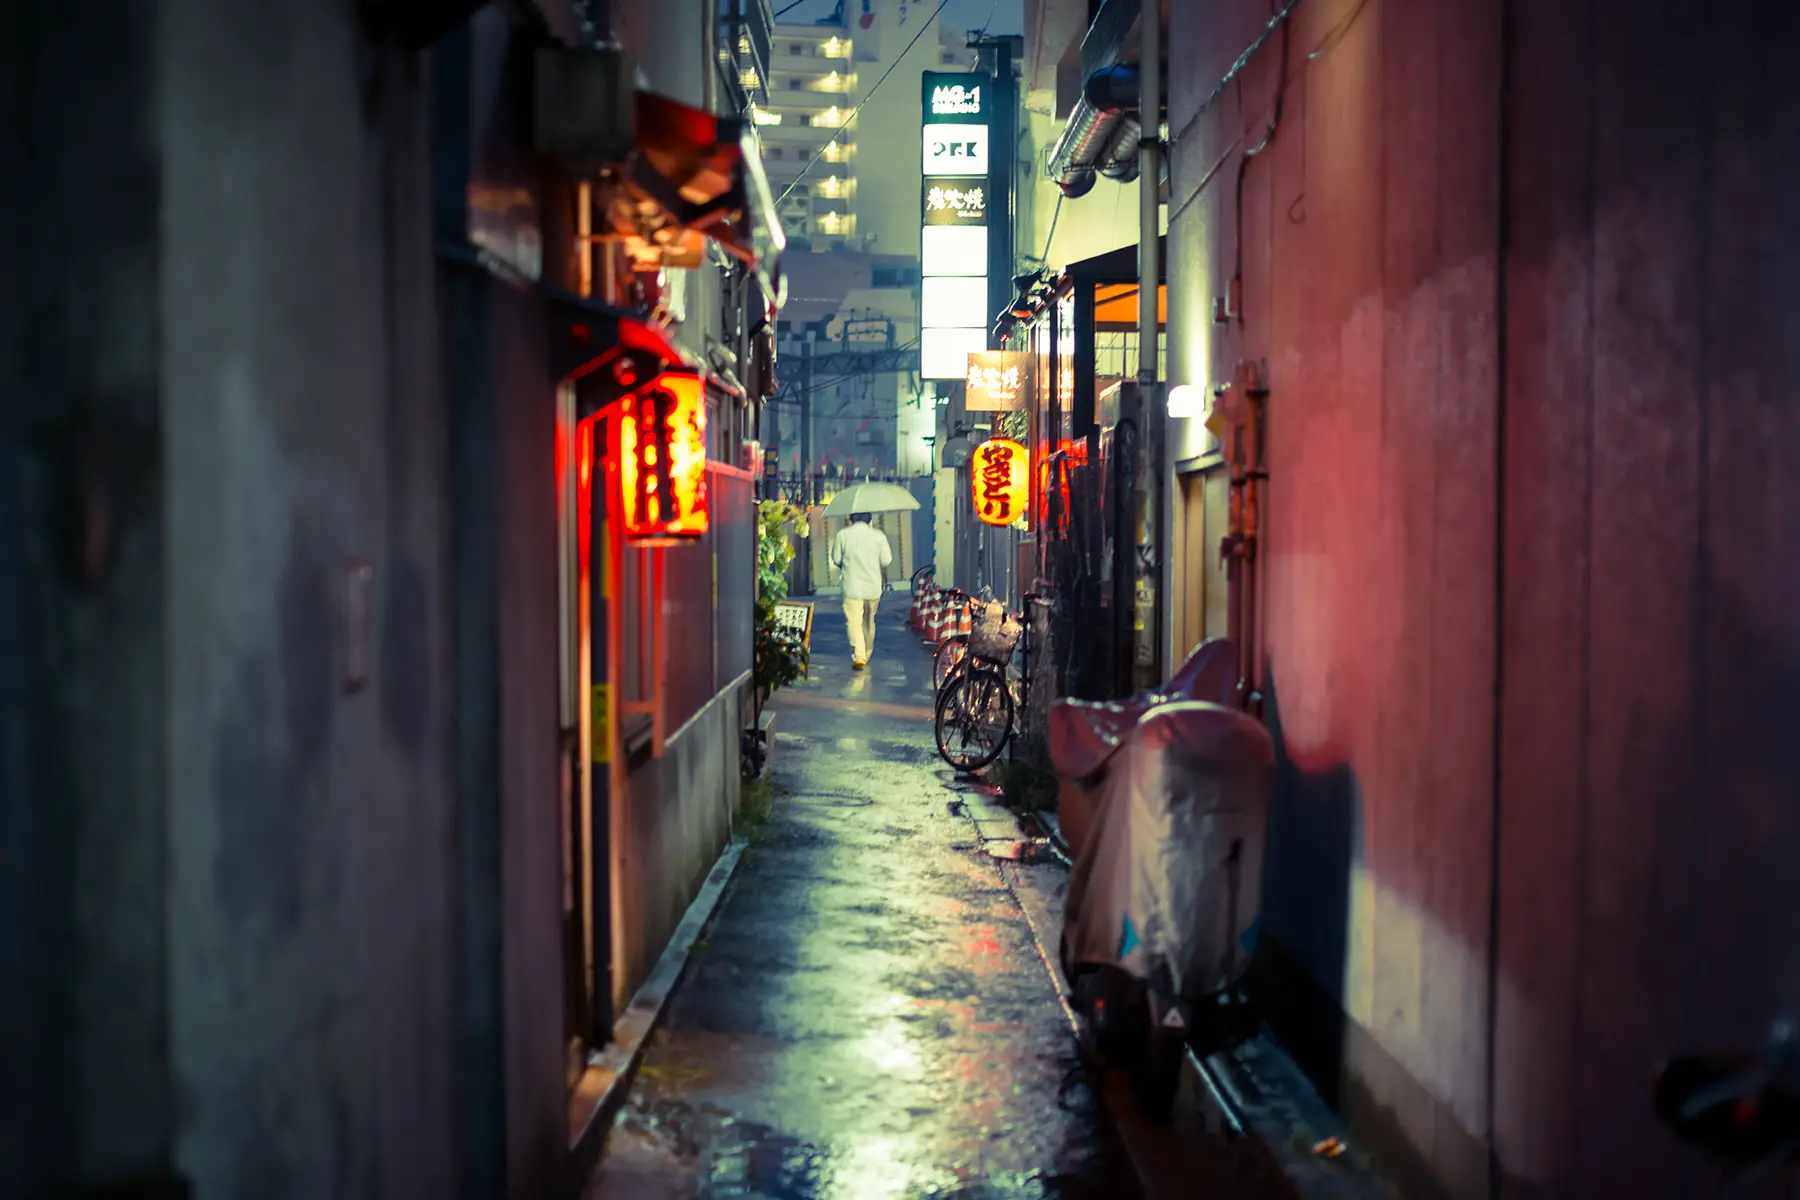 An alley in Shimokitazawa neighborhood in Tokyo, Japan, moody street lighting